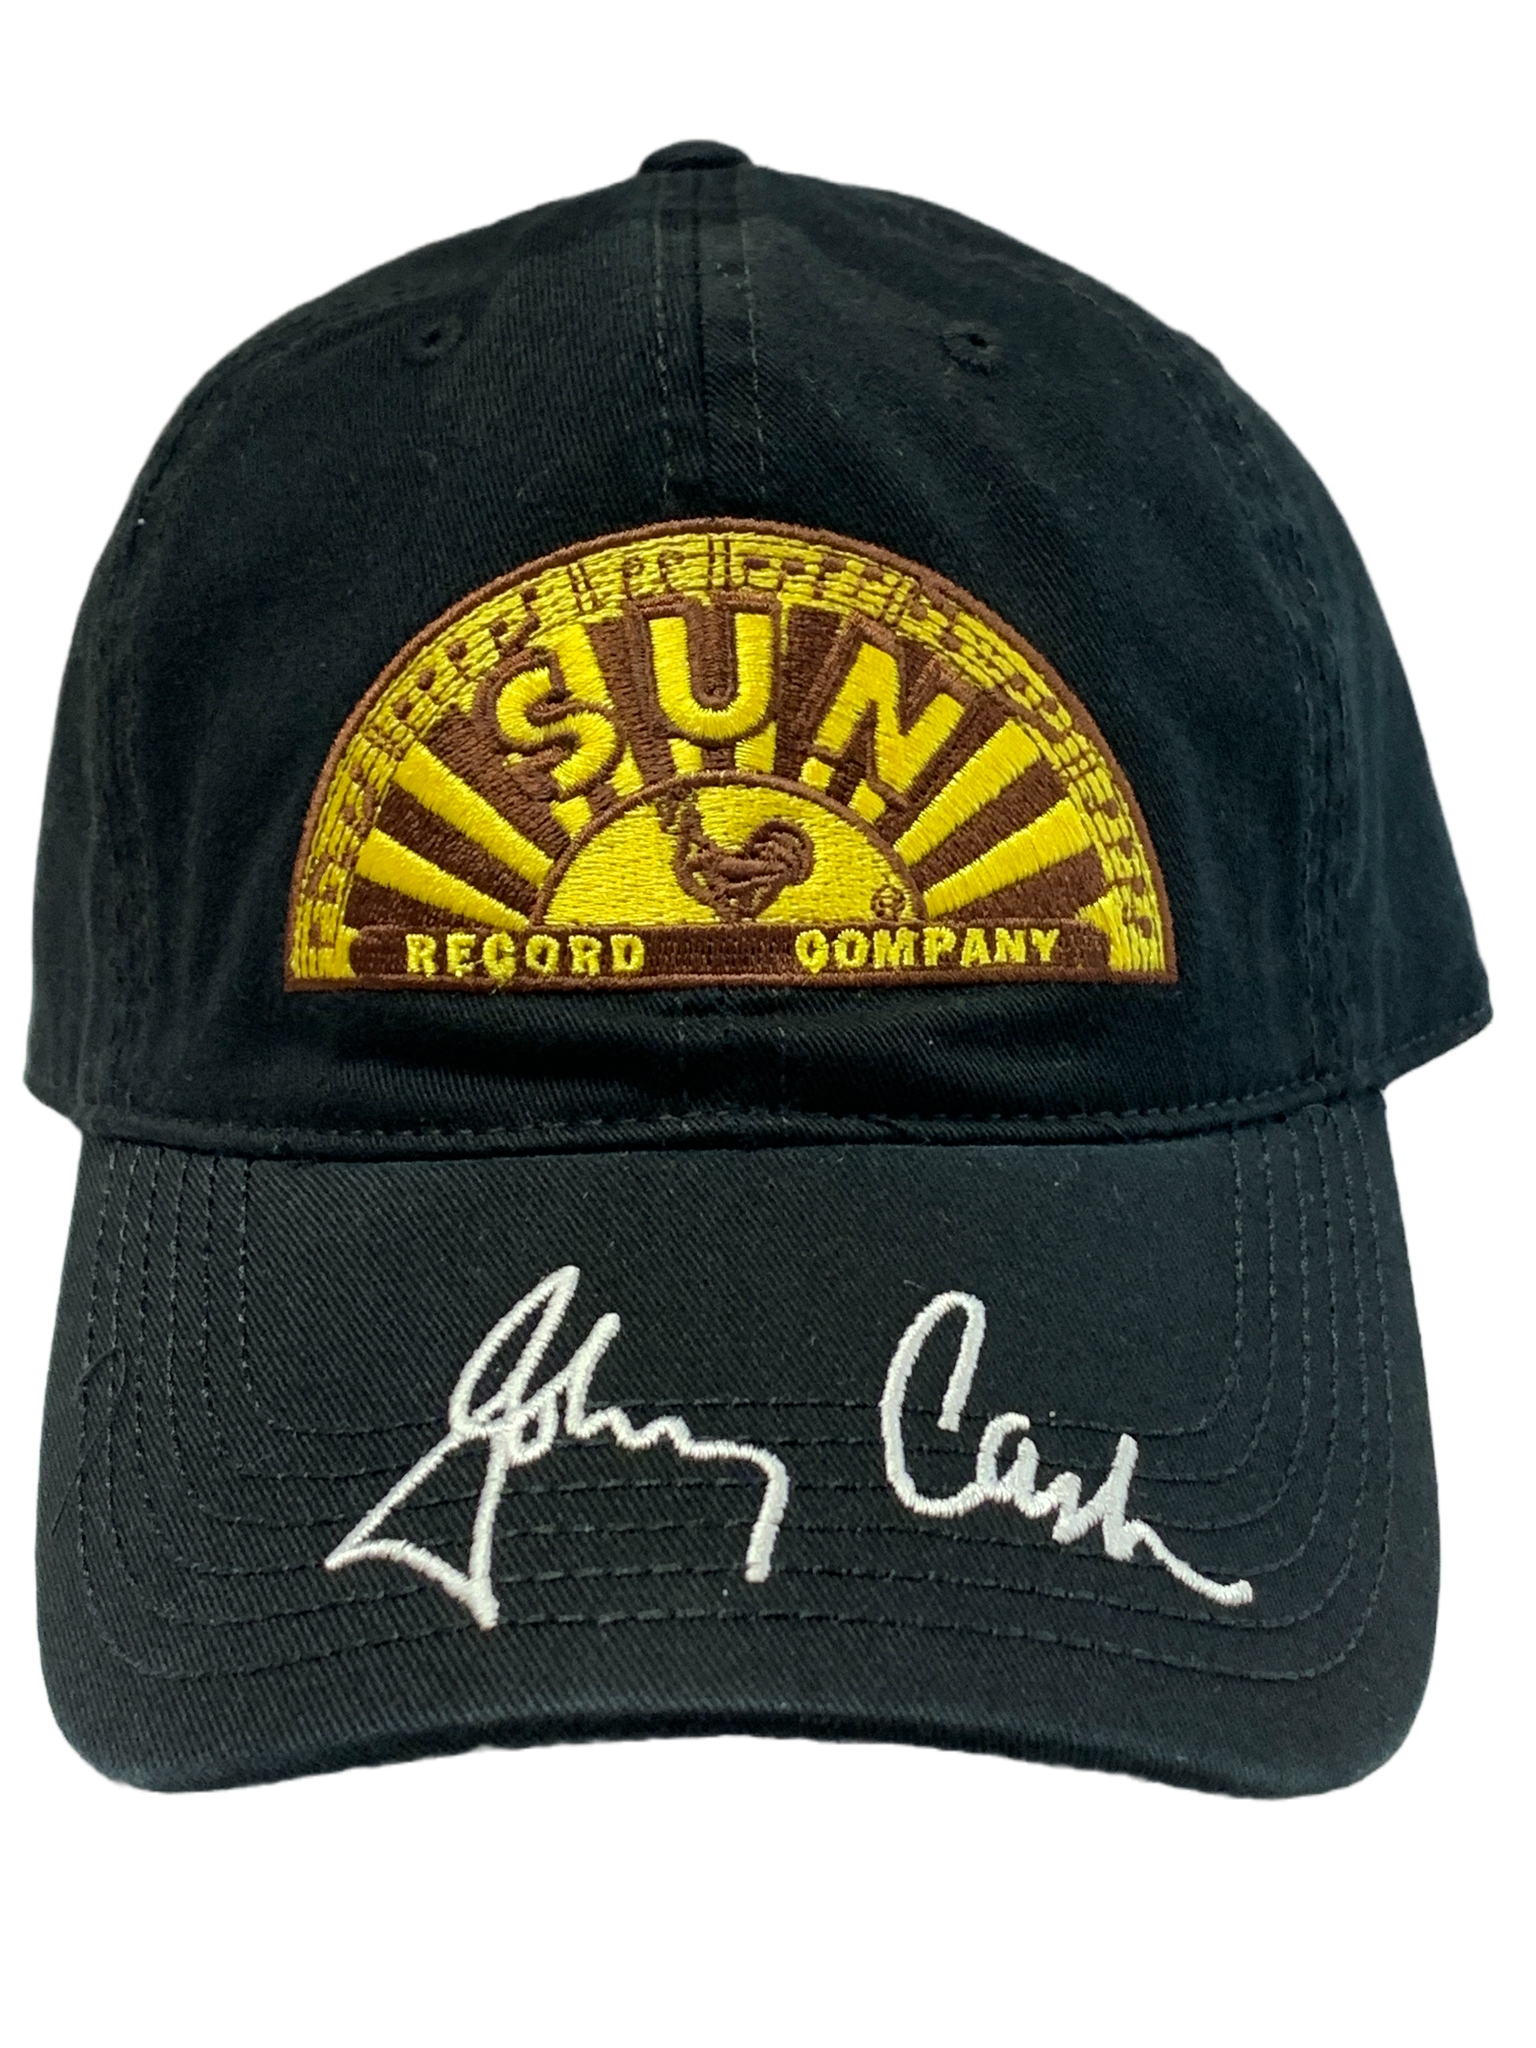 Cap Sun Records Company Johnny Cash Signature